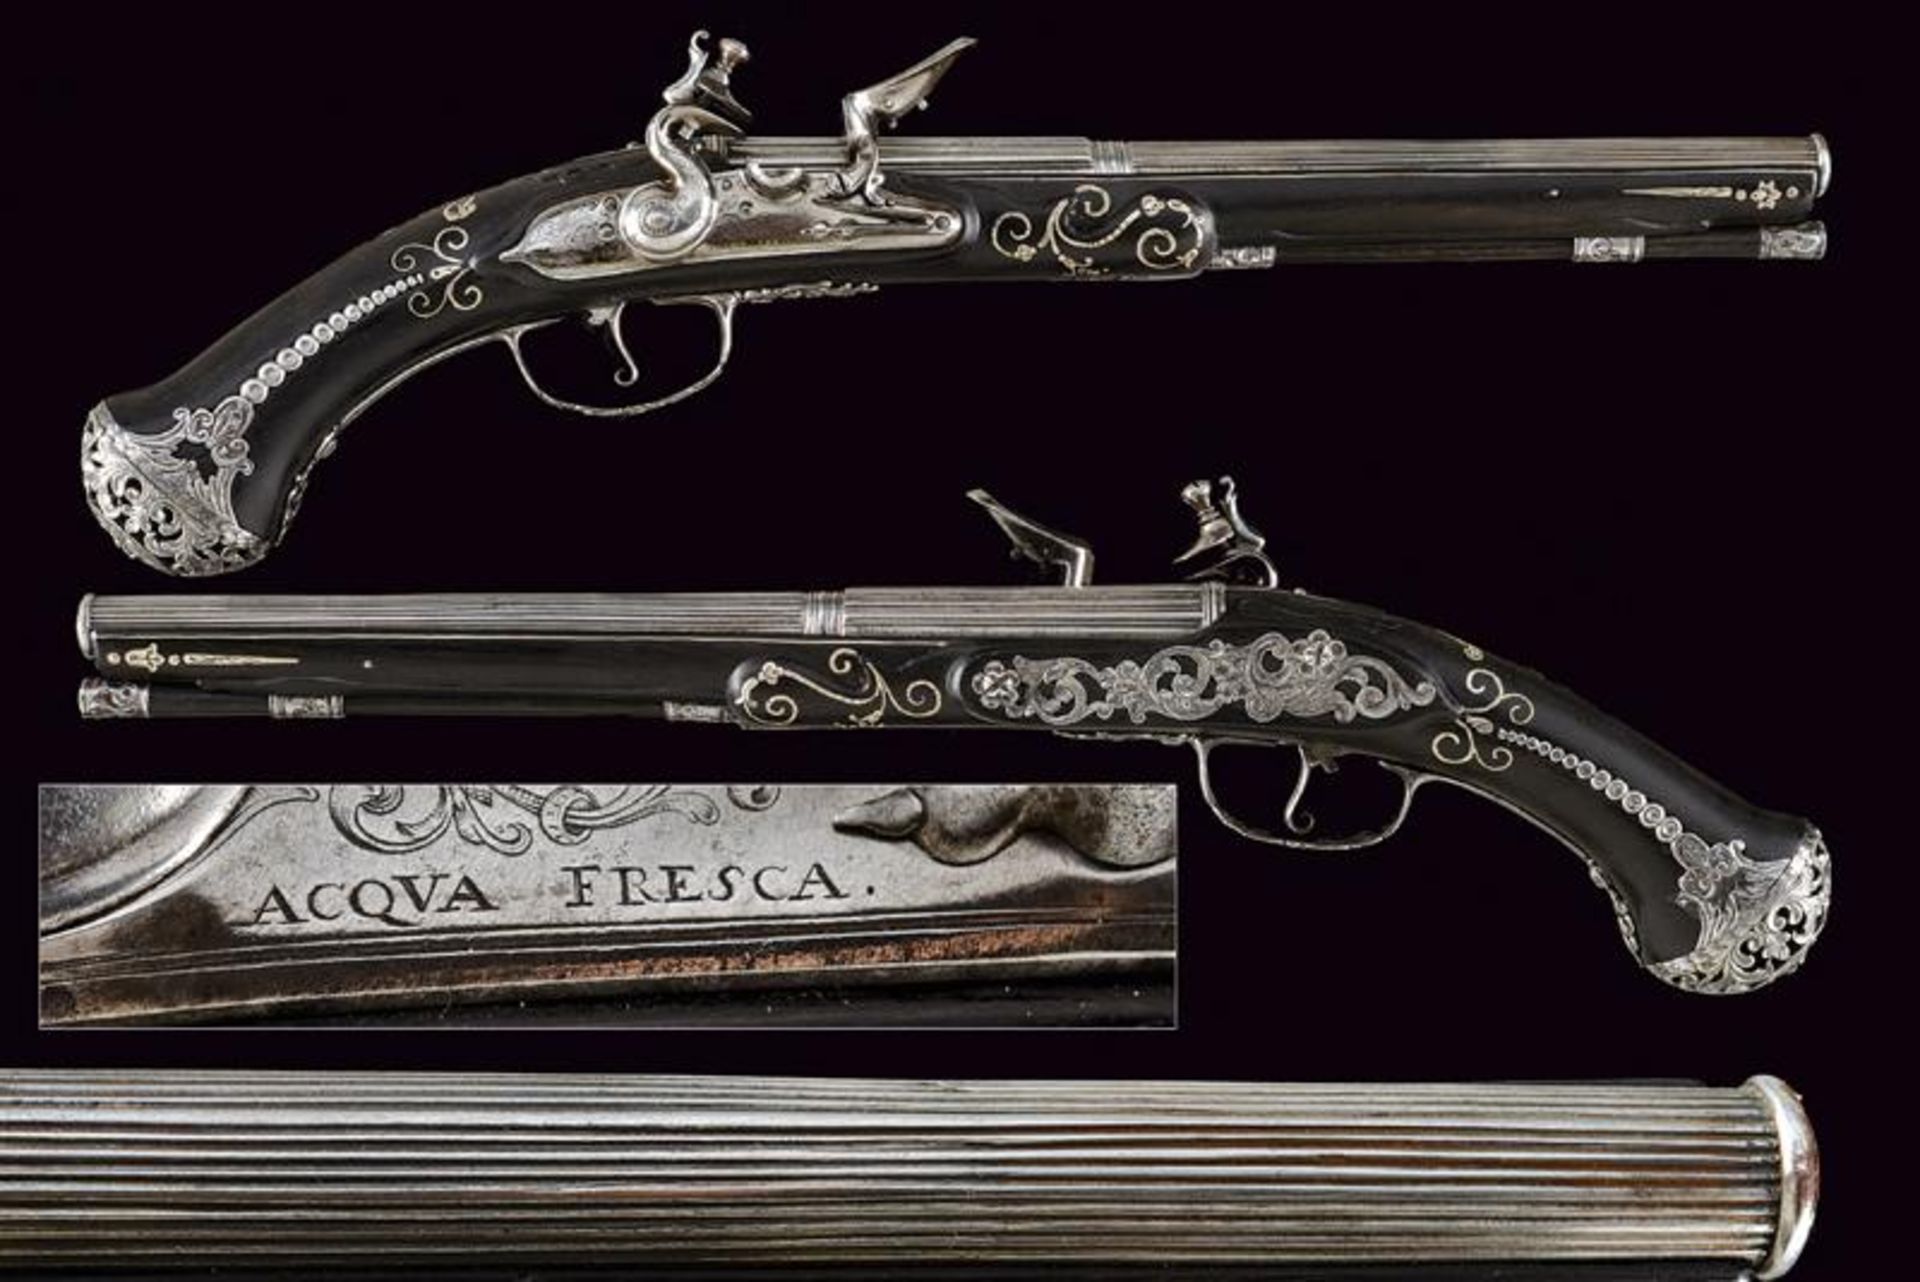 An important pair of flintlock pistols by Acqua Fresca